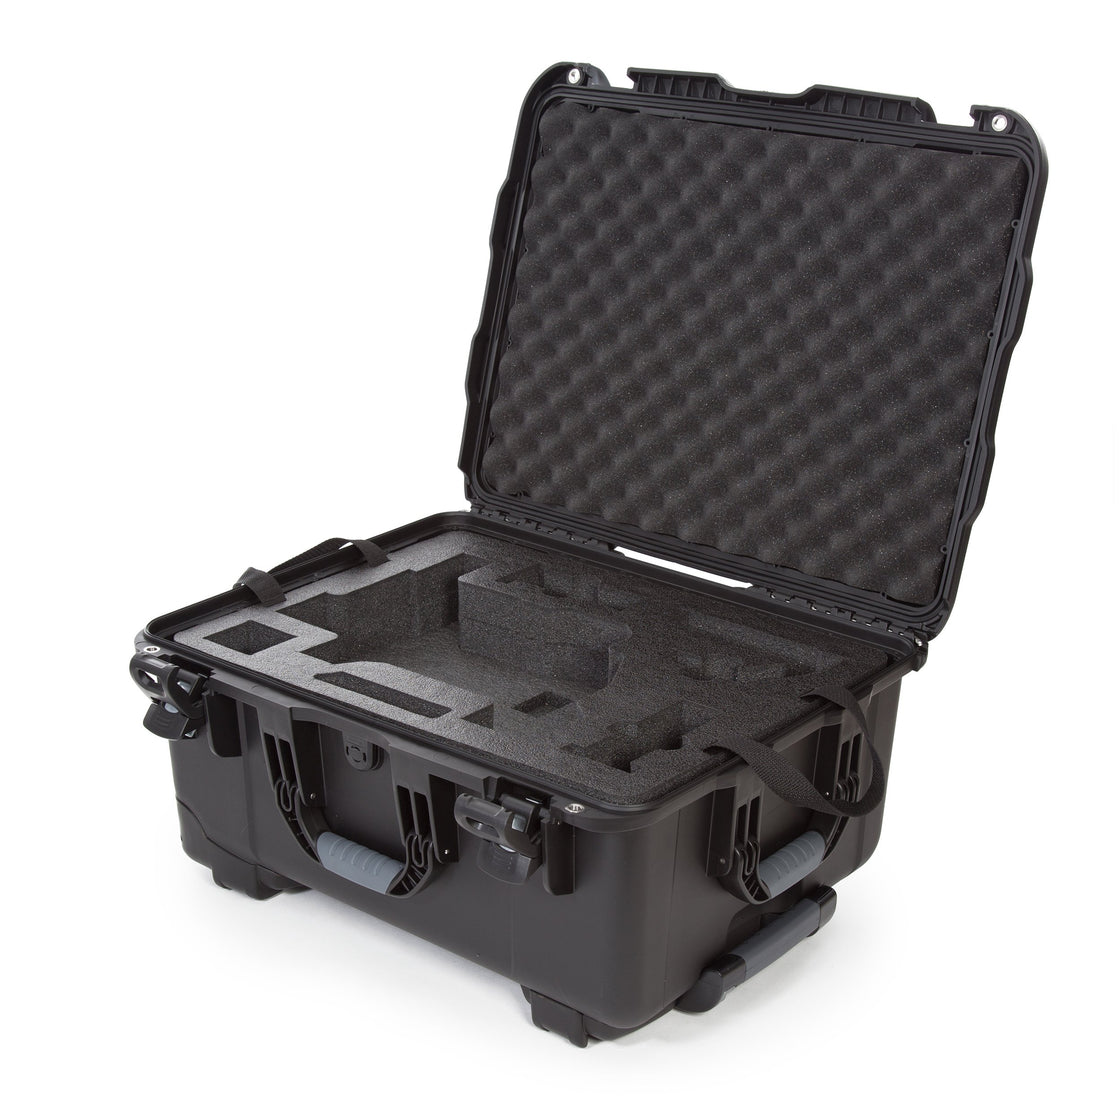 nanuk 945 waterproof hard drone case with custom foam insert for dji phantom 4 phantom 4 pro pro advanced advanced phantom 3 graphite